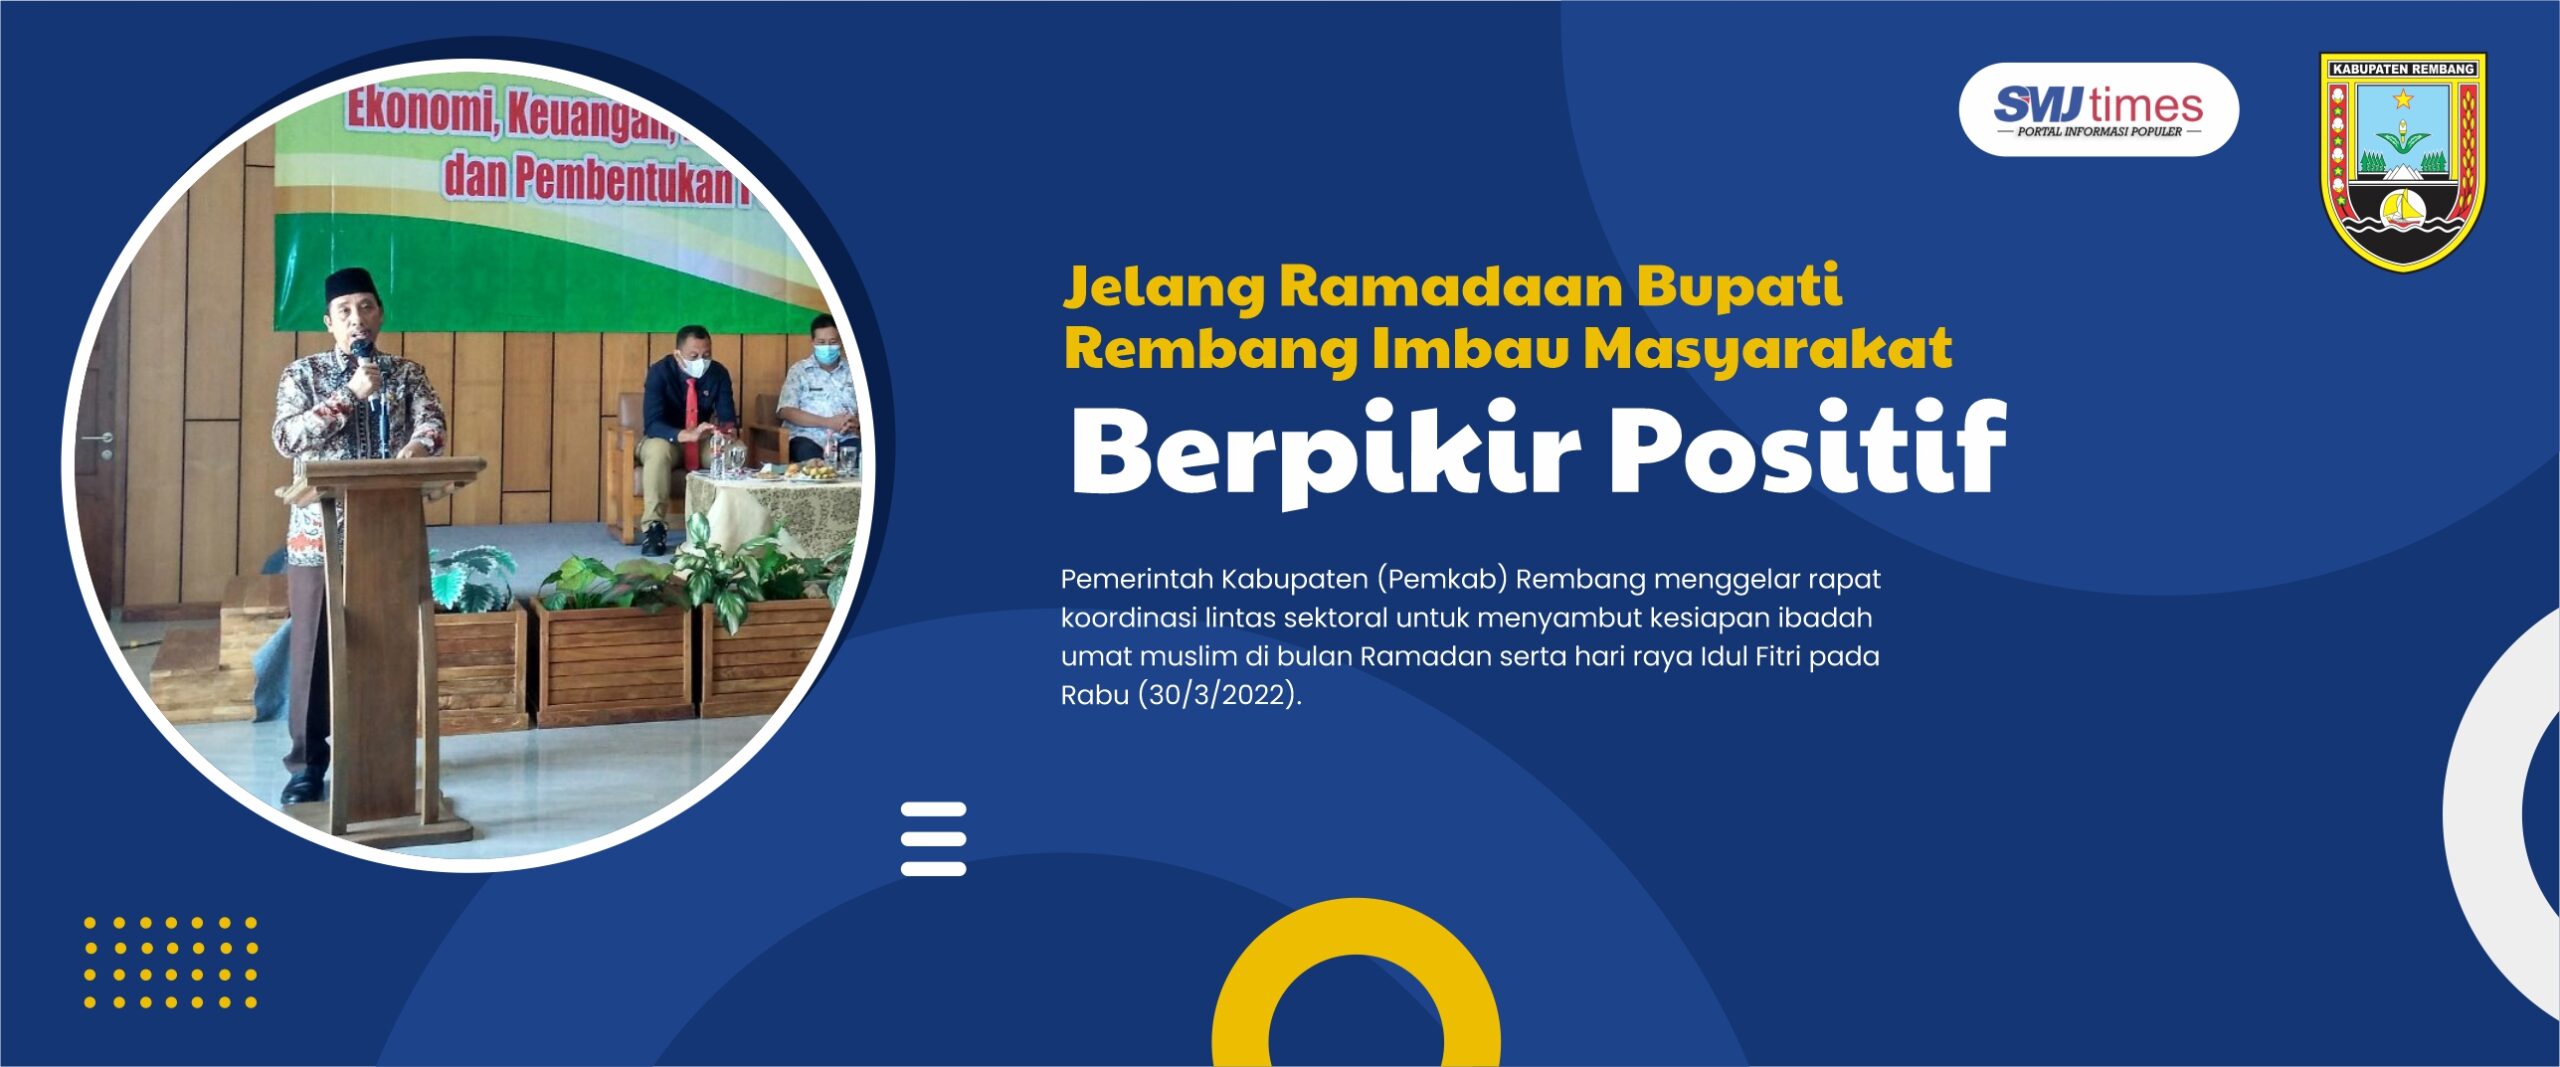 Jelang Ramadan, Bupati Rembang Imbau Masyarakat Berpikir Positif